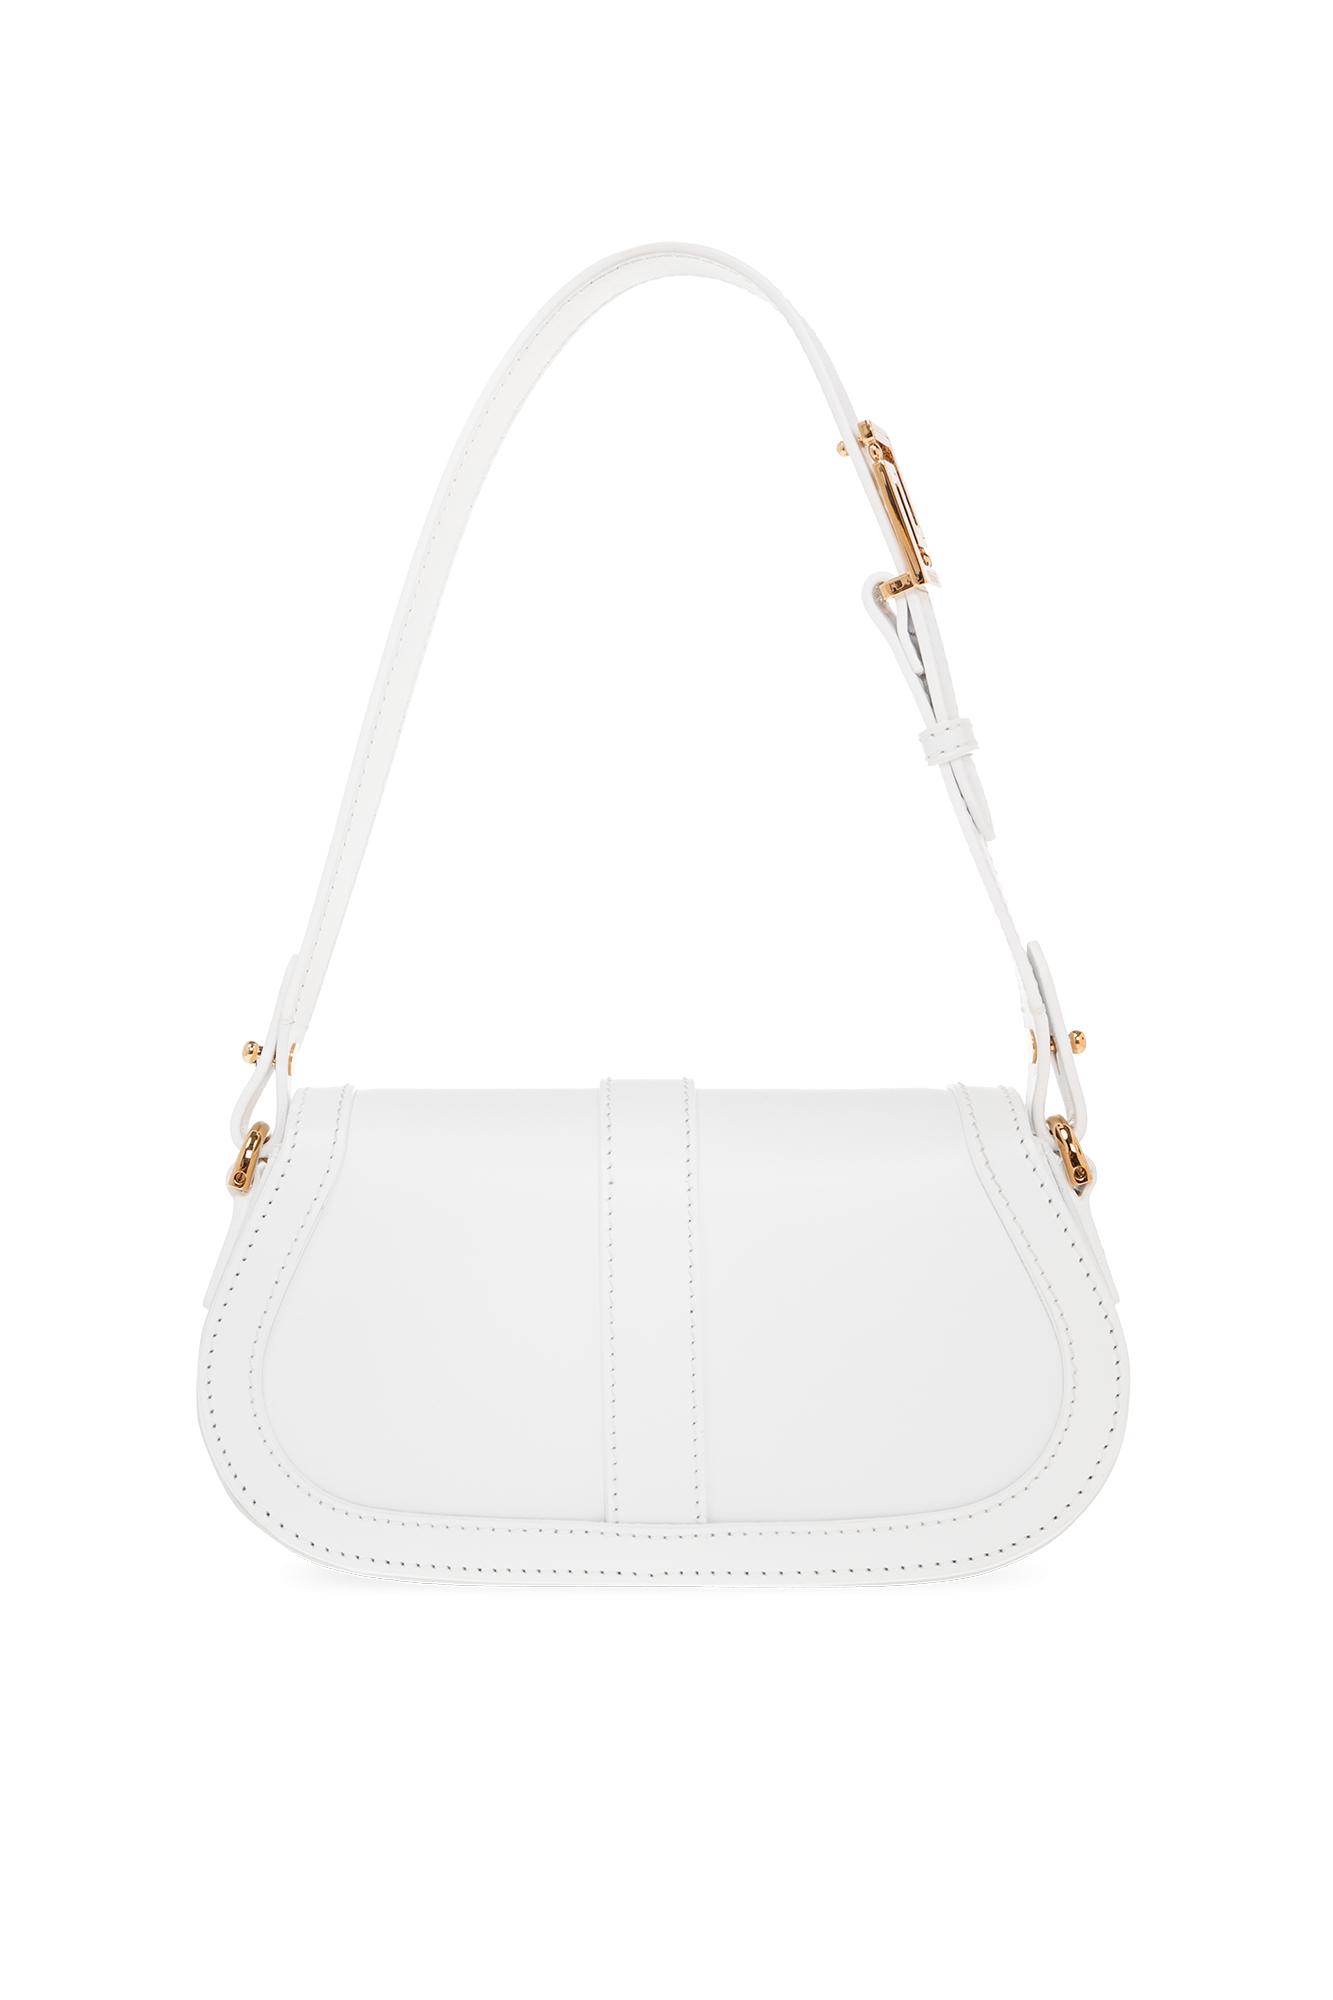 Versace Women's White Leather Shoulder Bag